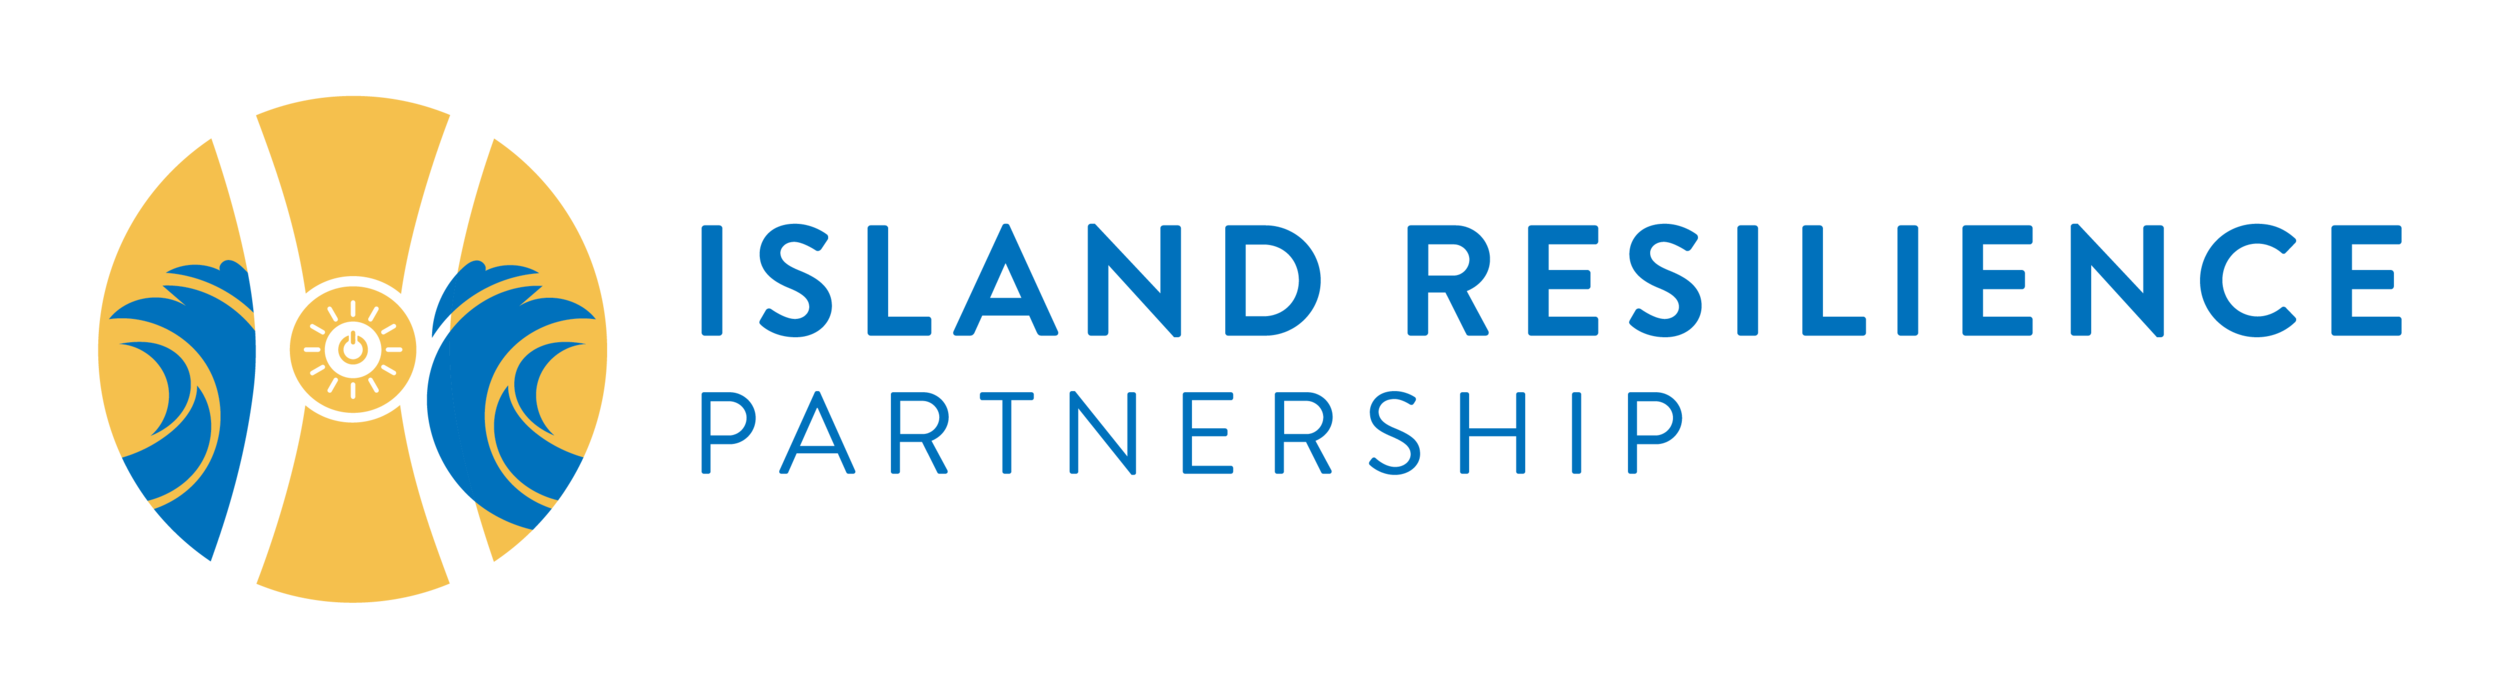 The Island Resilience Partnership